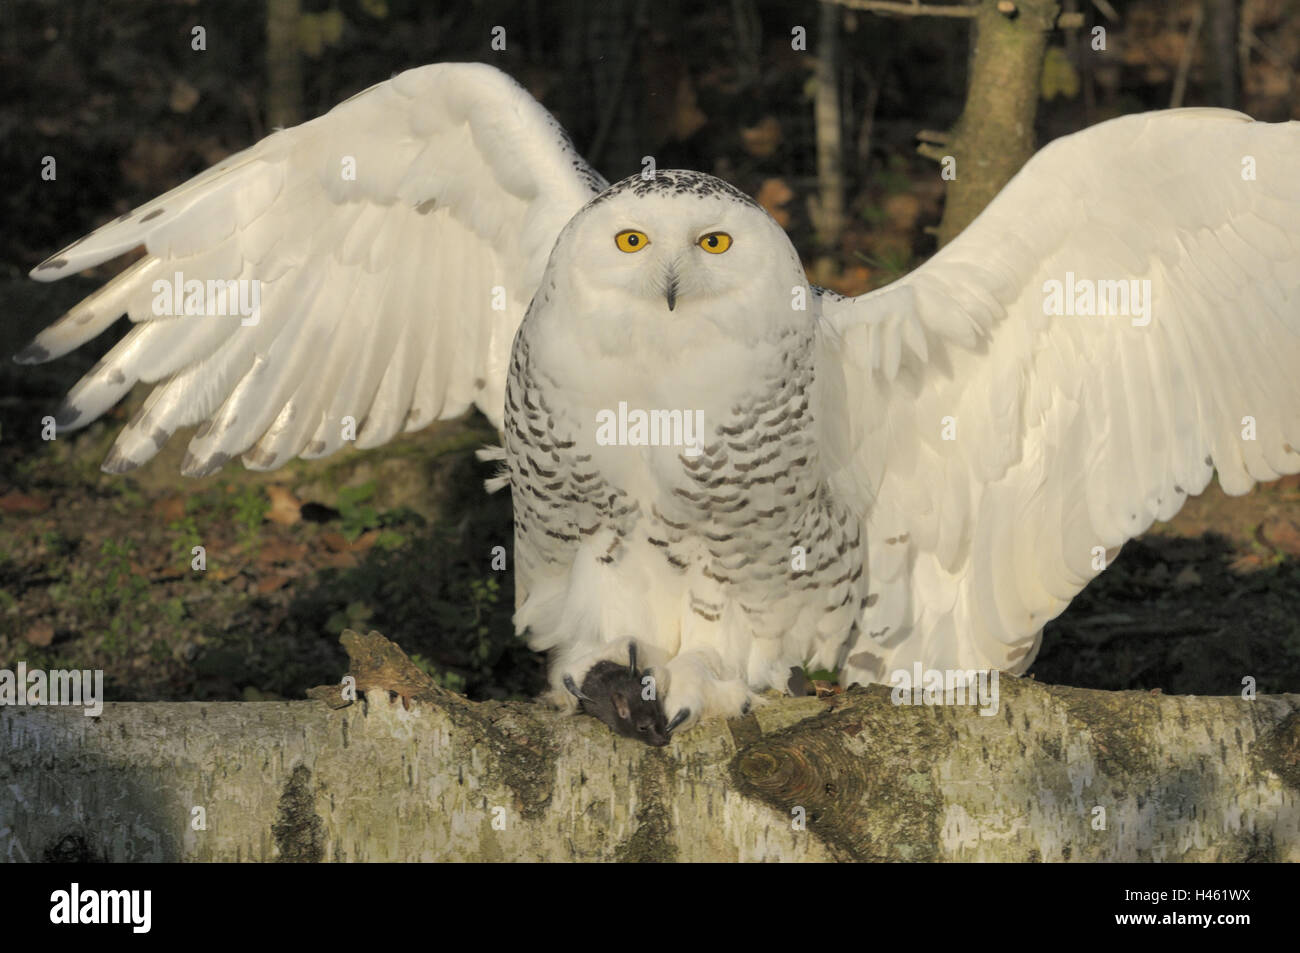 Snow owl, Nyctea scandiaca, Stock Photo